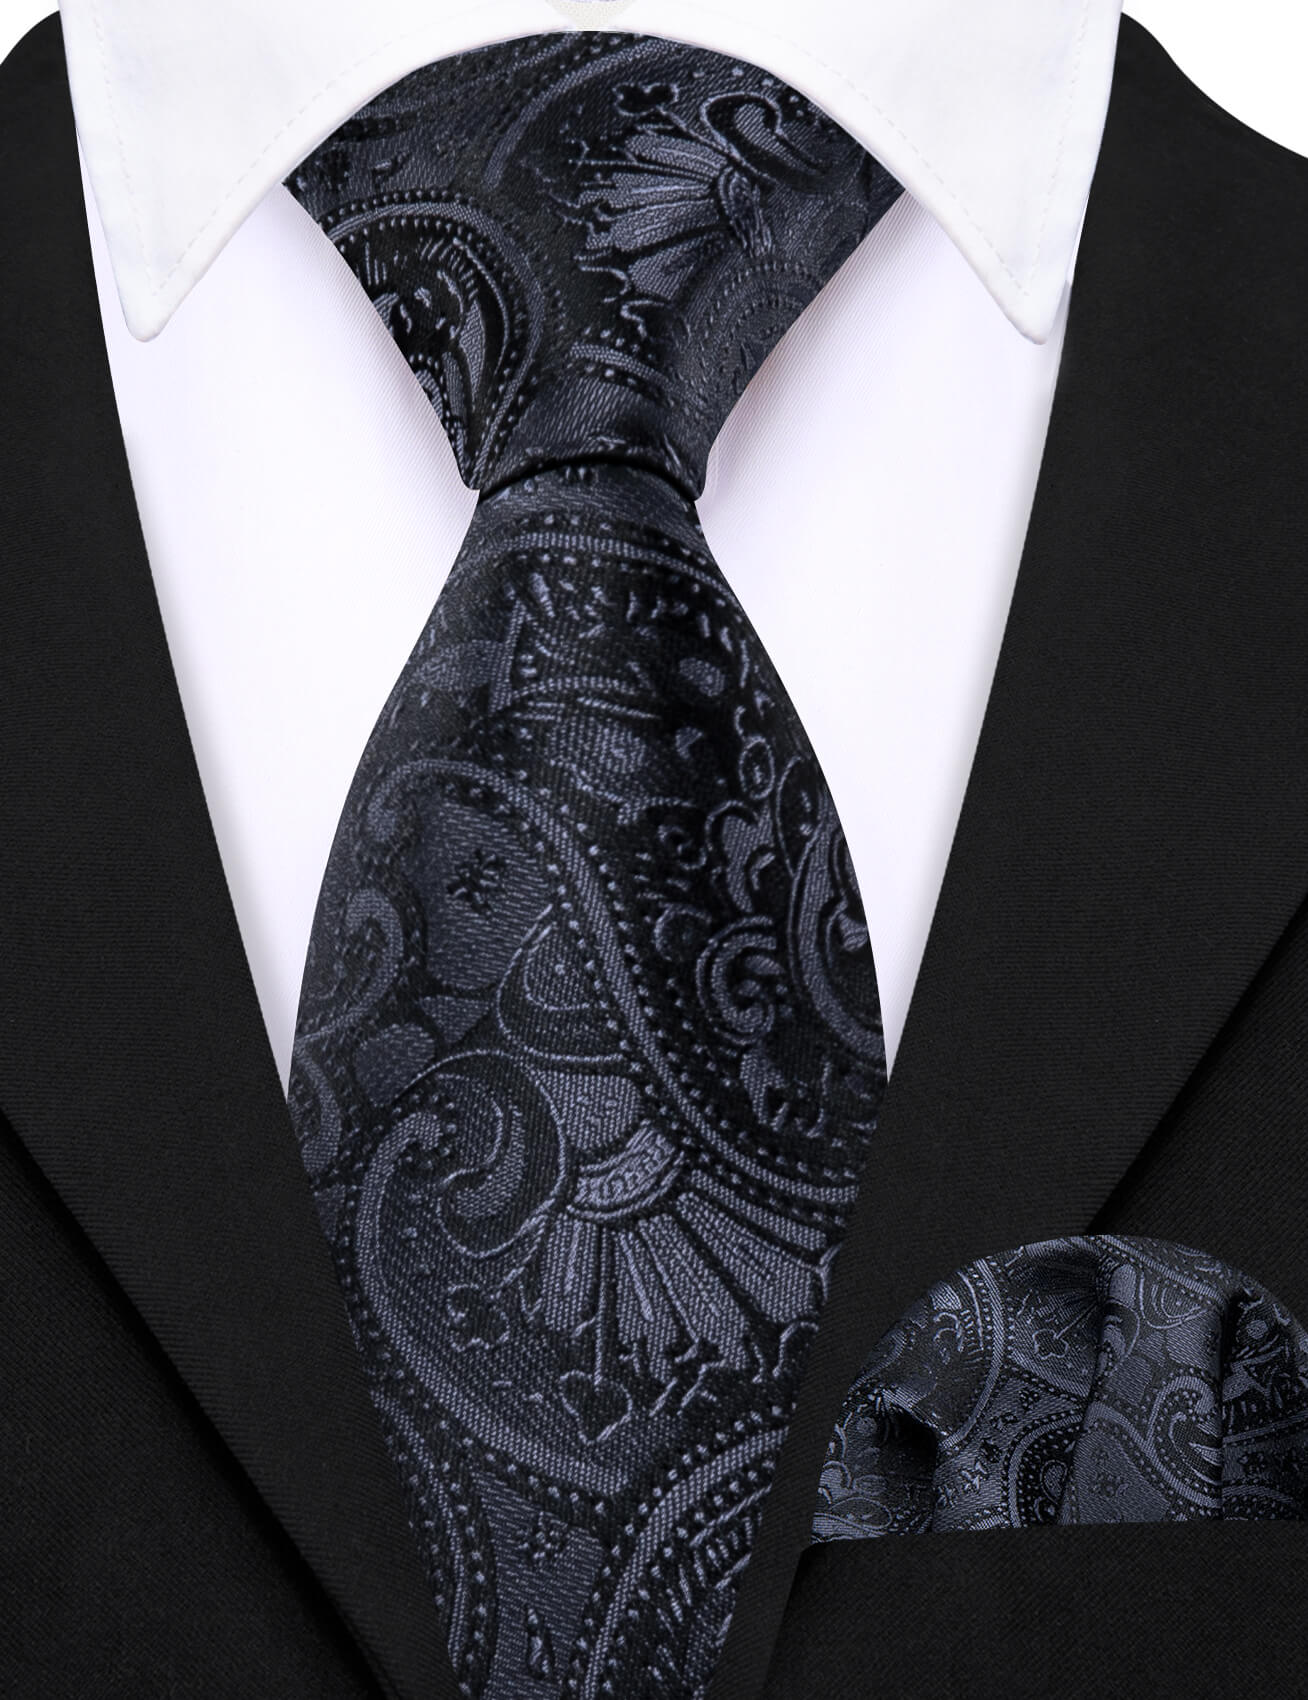 Barry.wang Floral Tie Black Grey Jacquard Children's Tie Hanky Set